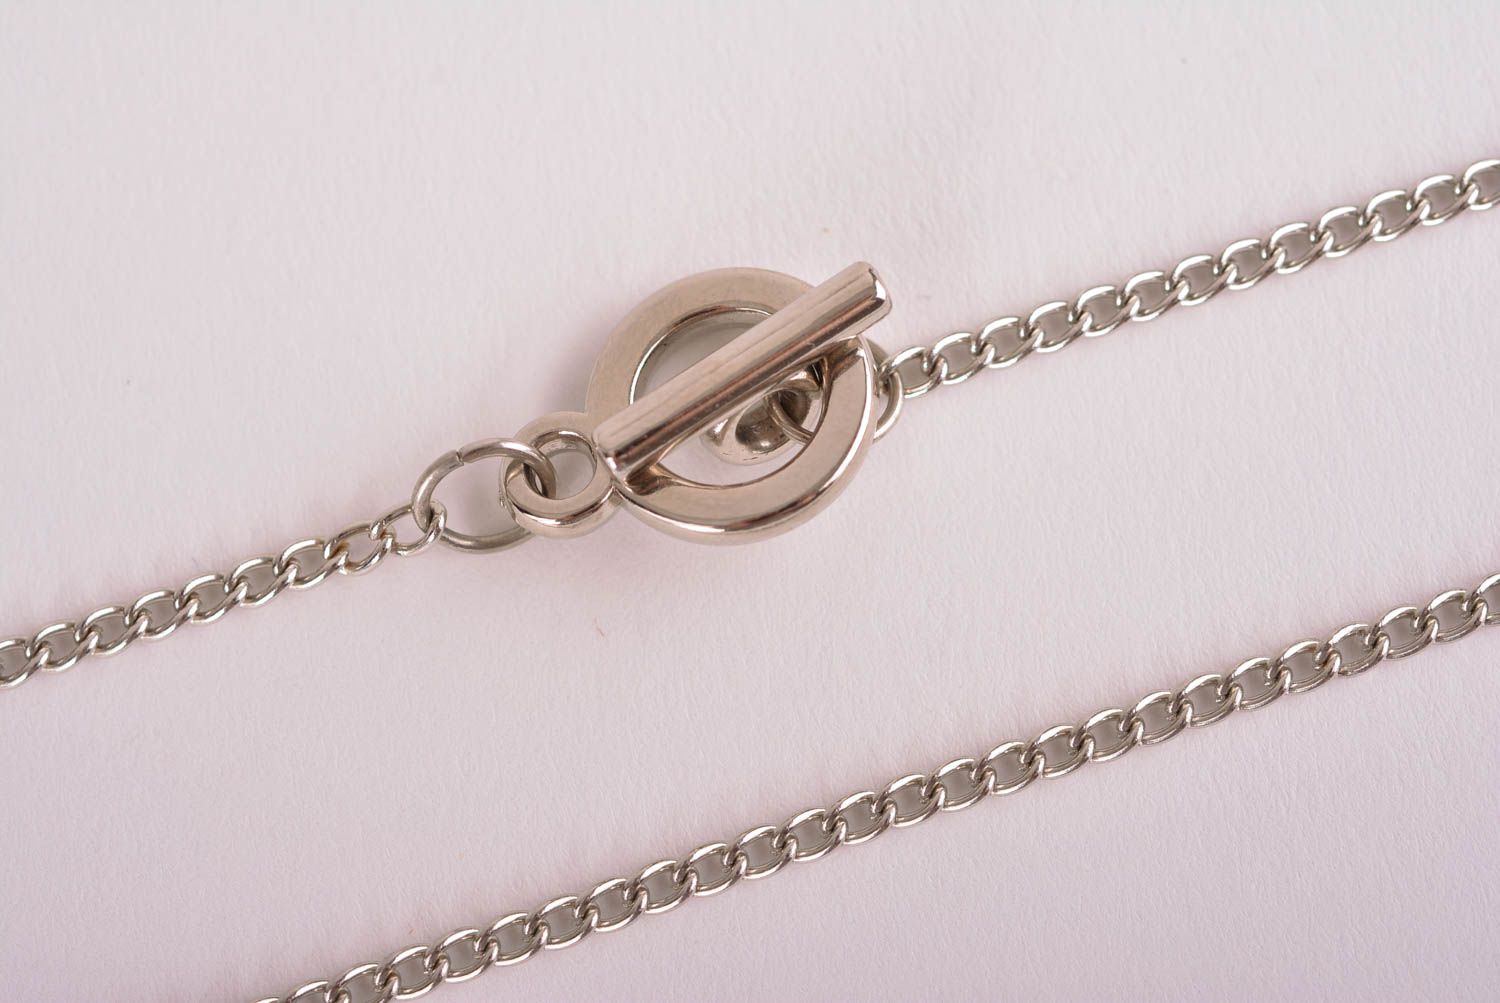 Handmade pendant unusual jewelry designer accessory gift ideas epoxy jewelry photo 5